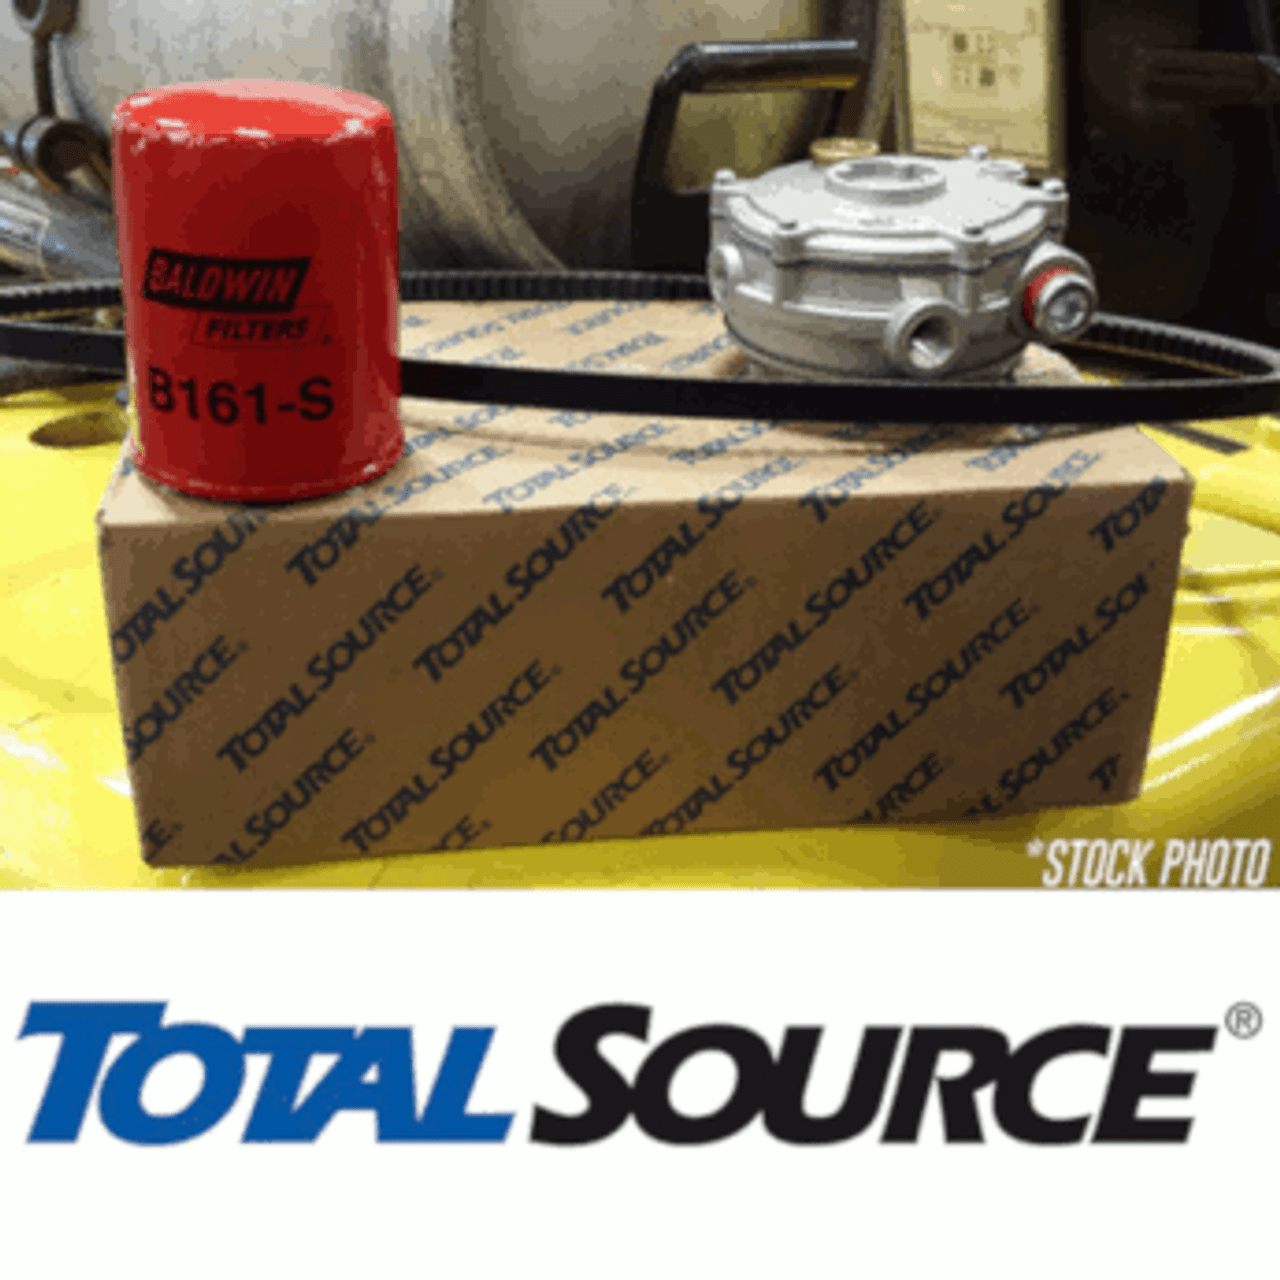 00279-1QT5W: Toyota Forklift OIL - MOTOR - 5W-30